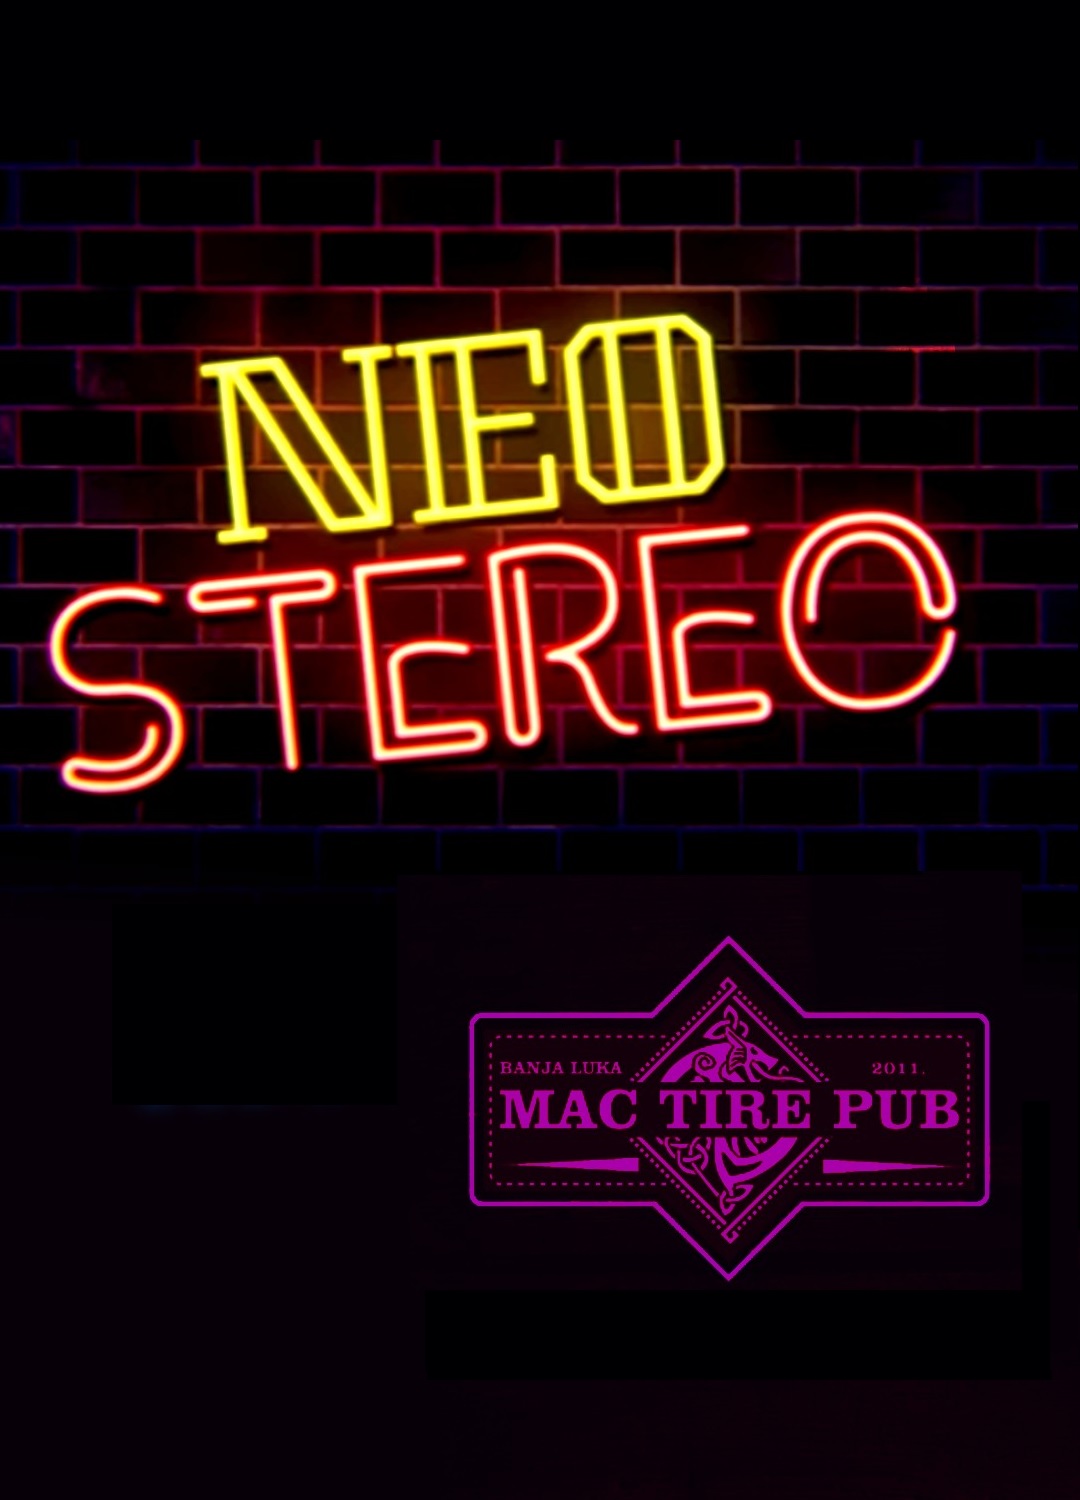 Neo Stereo Mac Tire pub